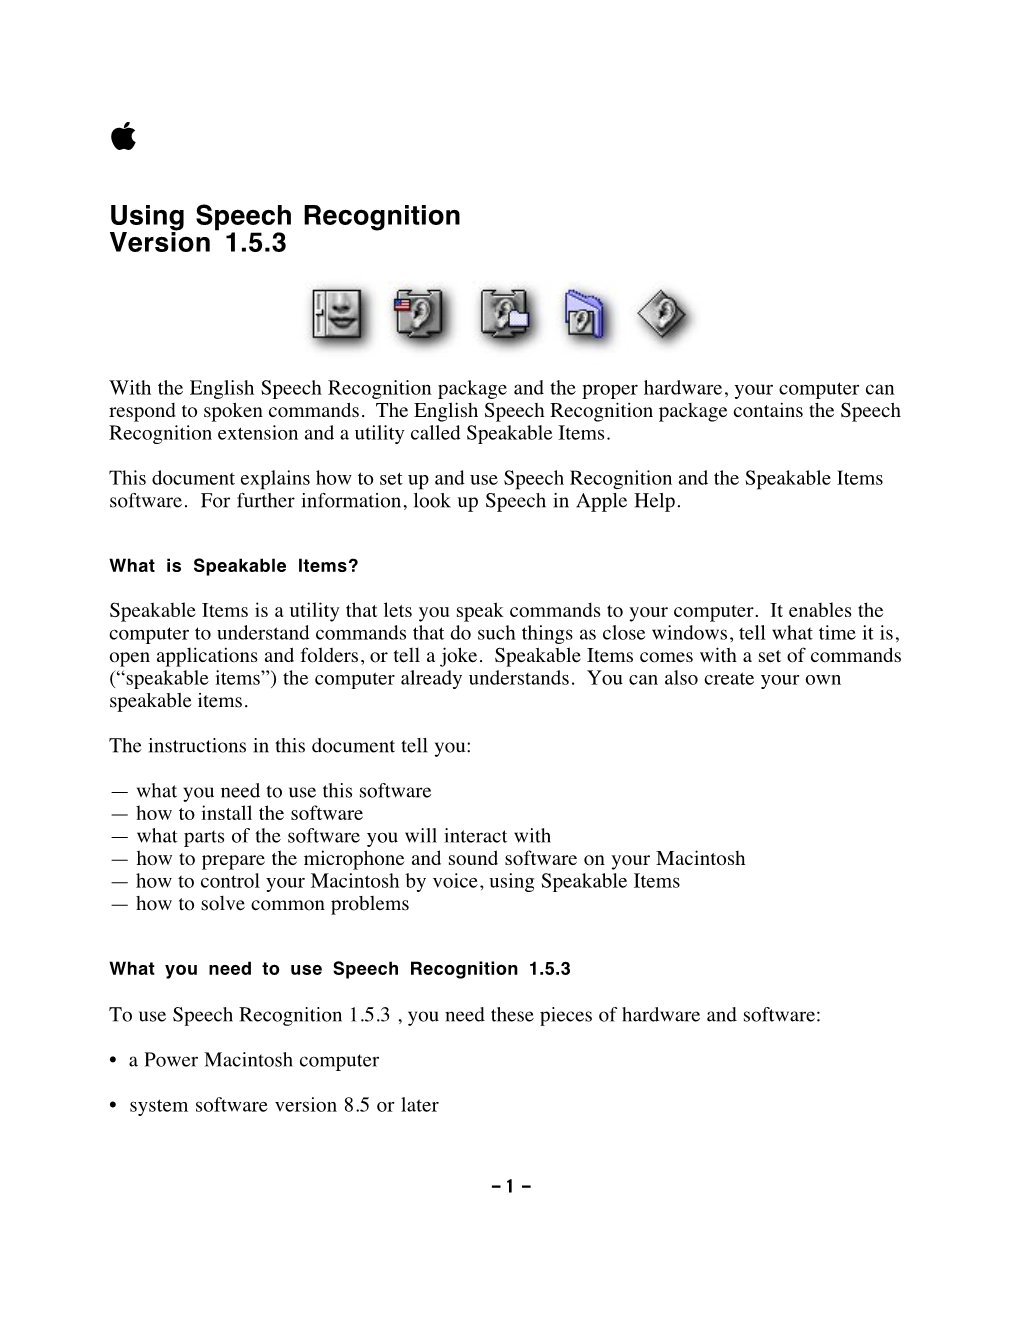 Using Speech Recognition Version 1.5.3